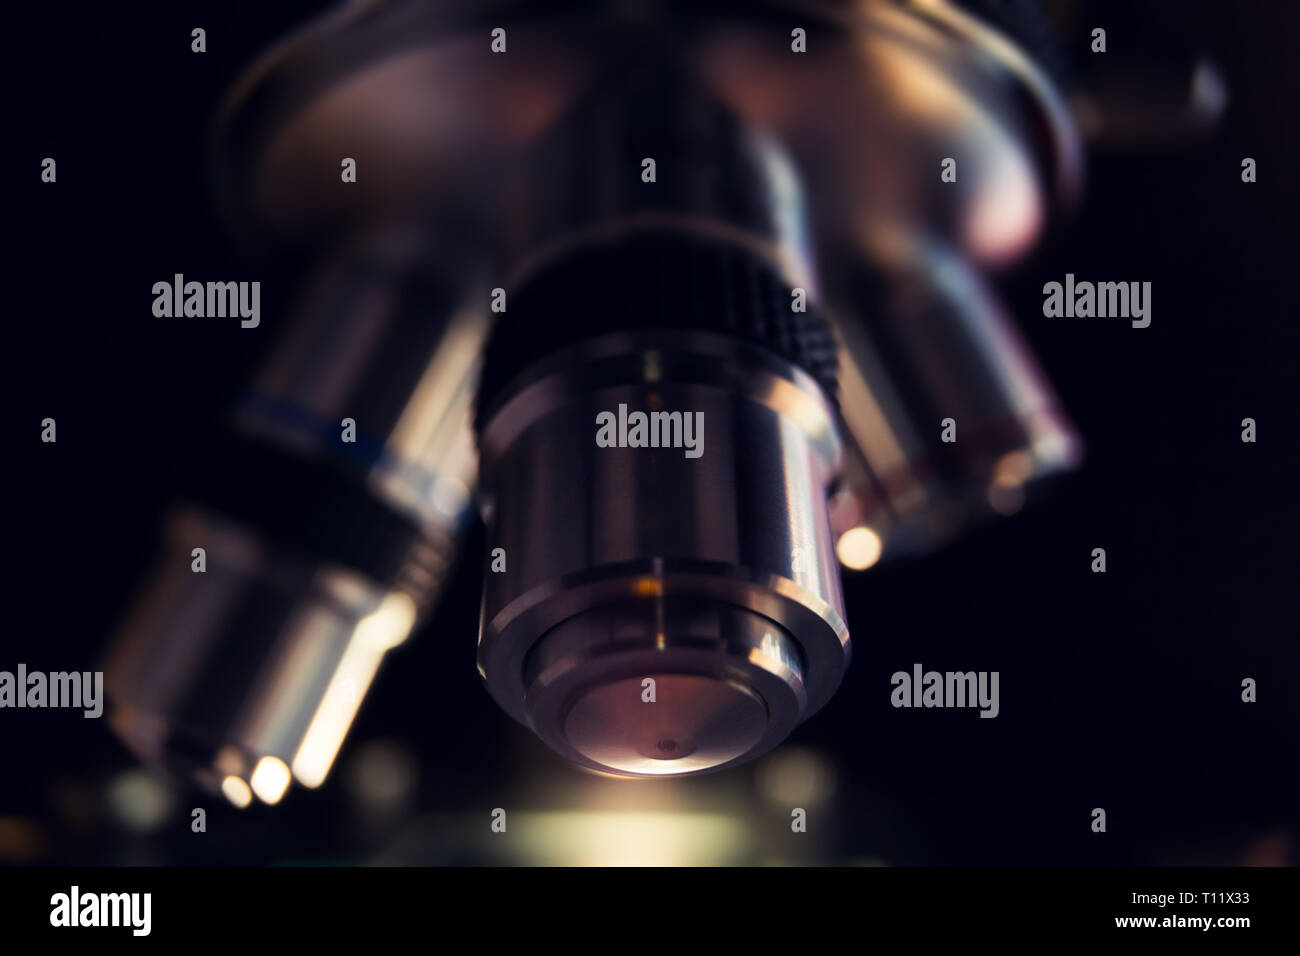 Laboratory Equipment - Optical Microscope. Photo of a medical microscope close-up. Stock Photo